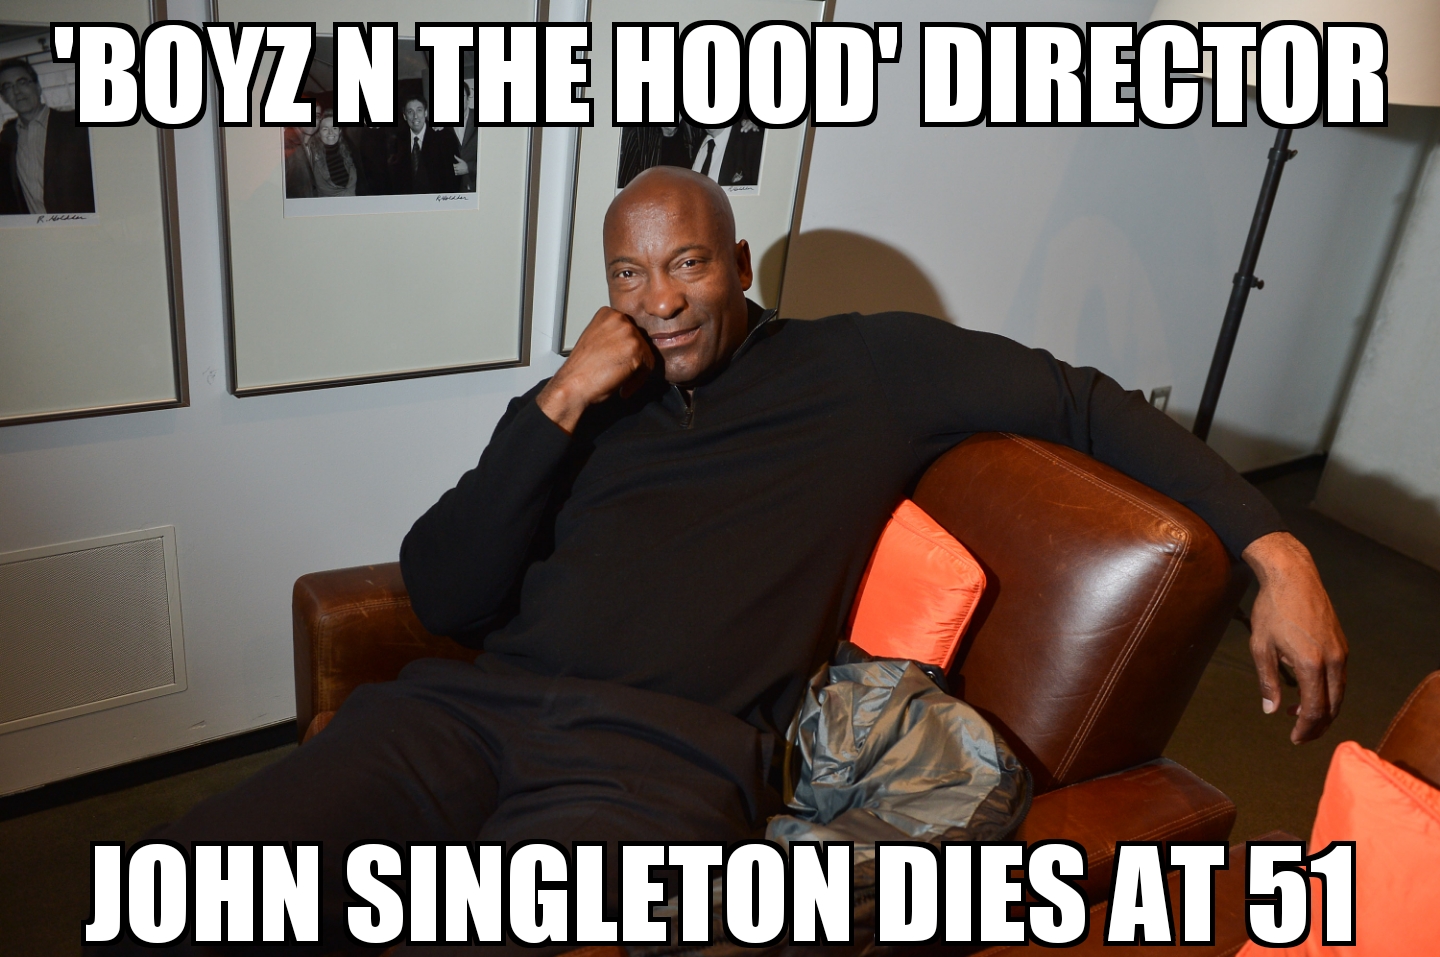 ‘Boyz N The Hood’ director John Singleton dies